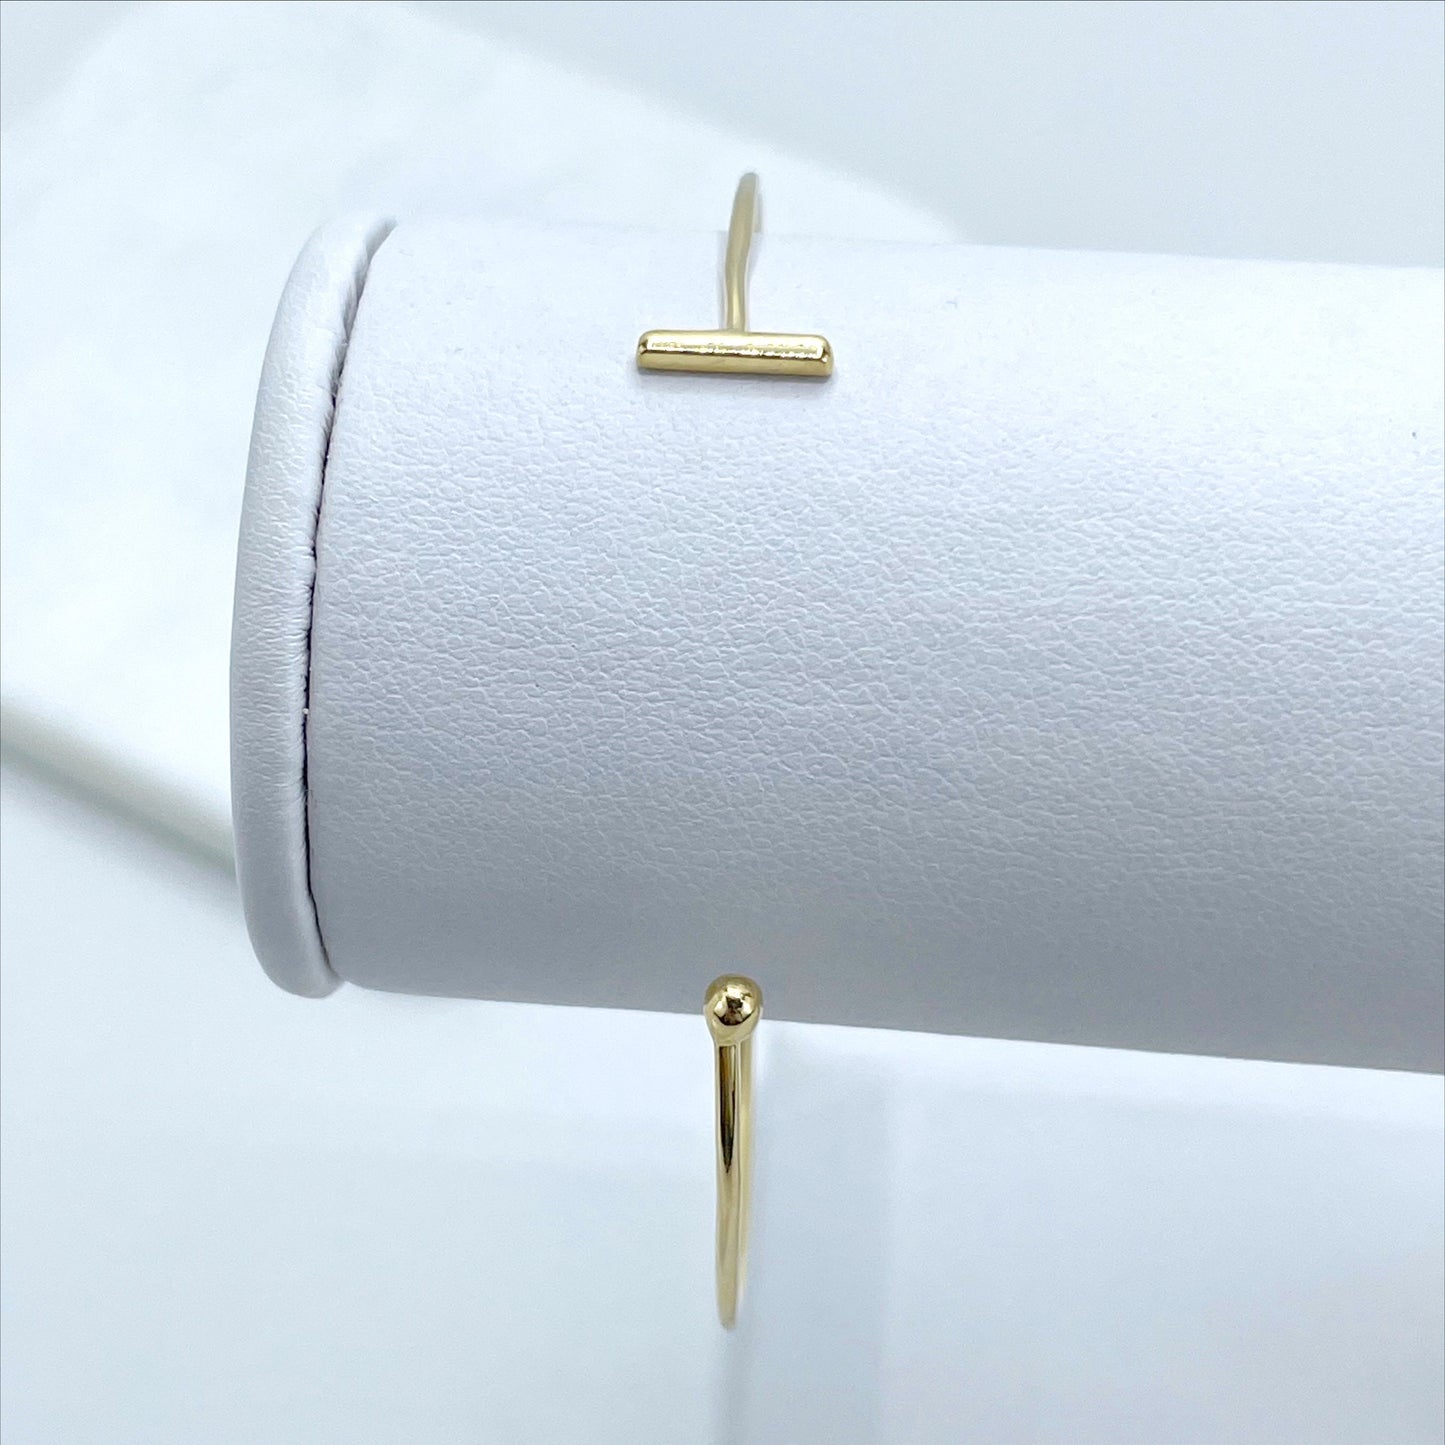 18k Gold Filled 1mm C Bangle Bracelet Wholesale Jewelry Supplies